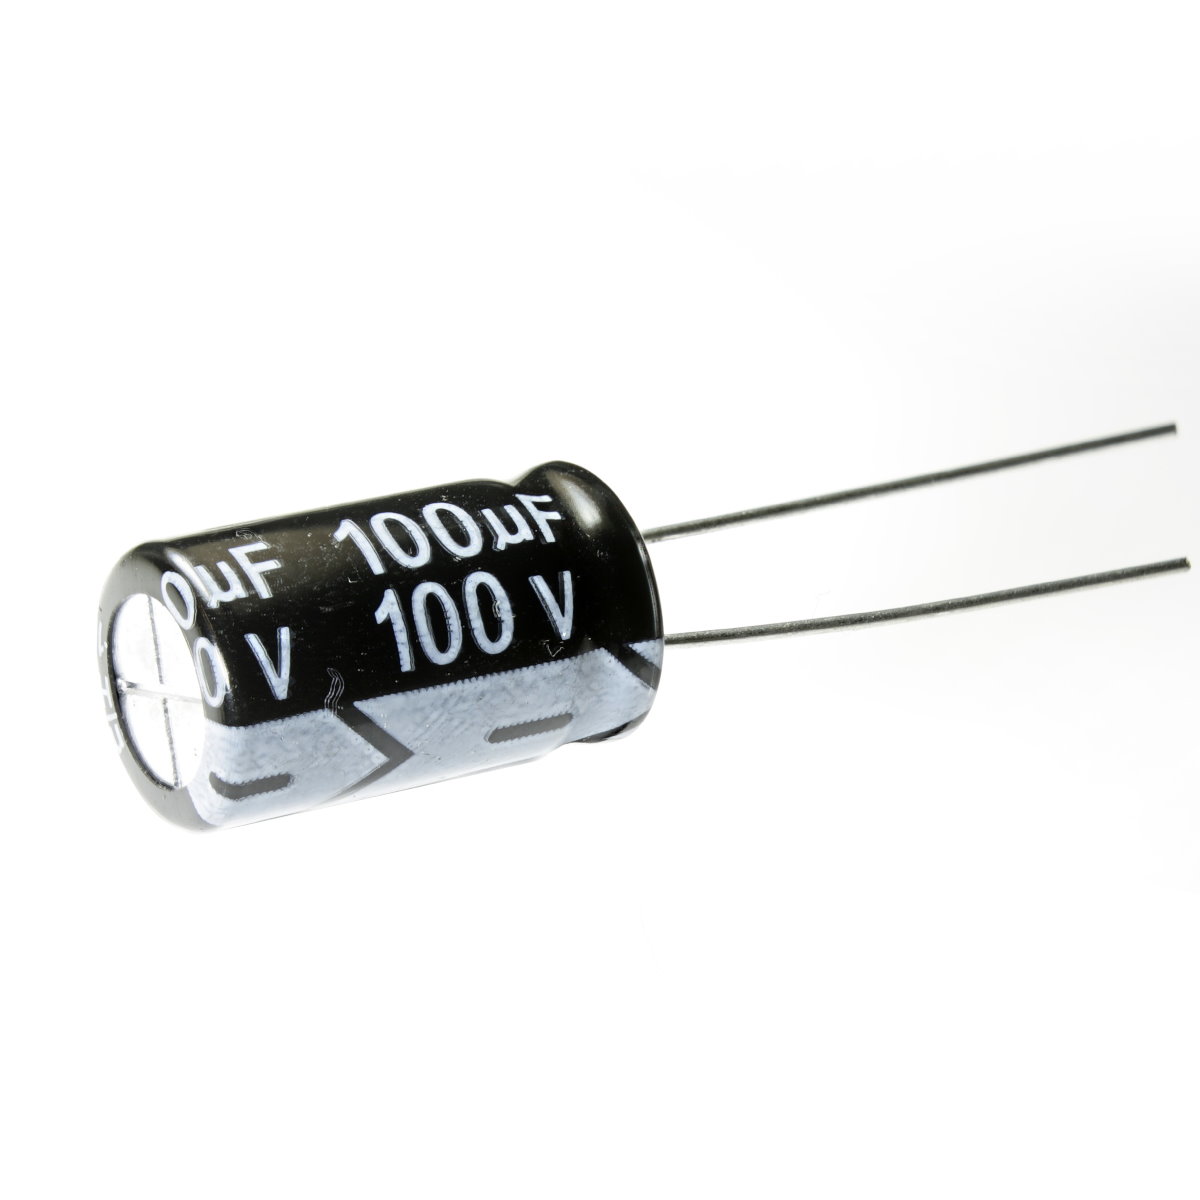 FTCAP Elektrolyt-Kondensatoren Serie ATBI Ton-Elko axial 10uF 100V